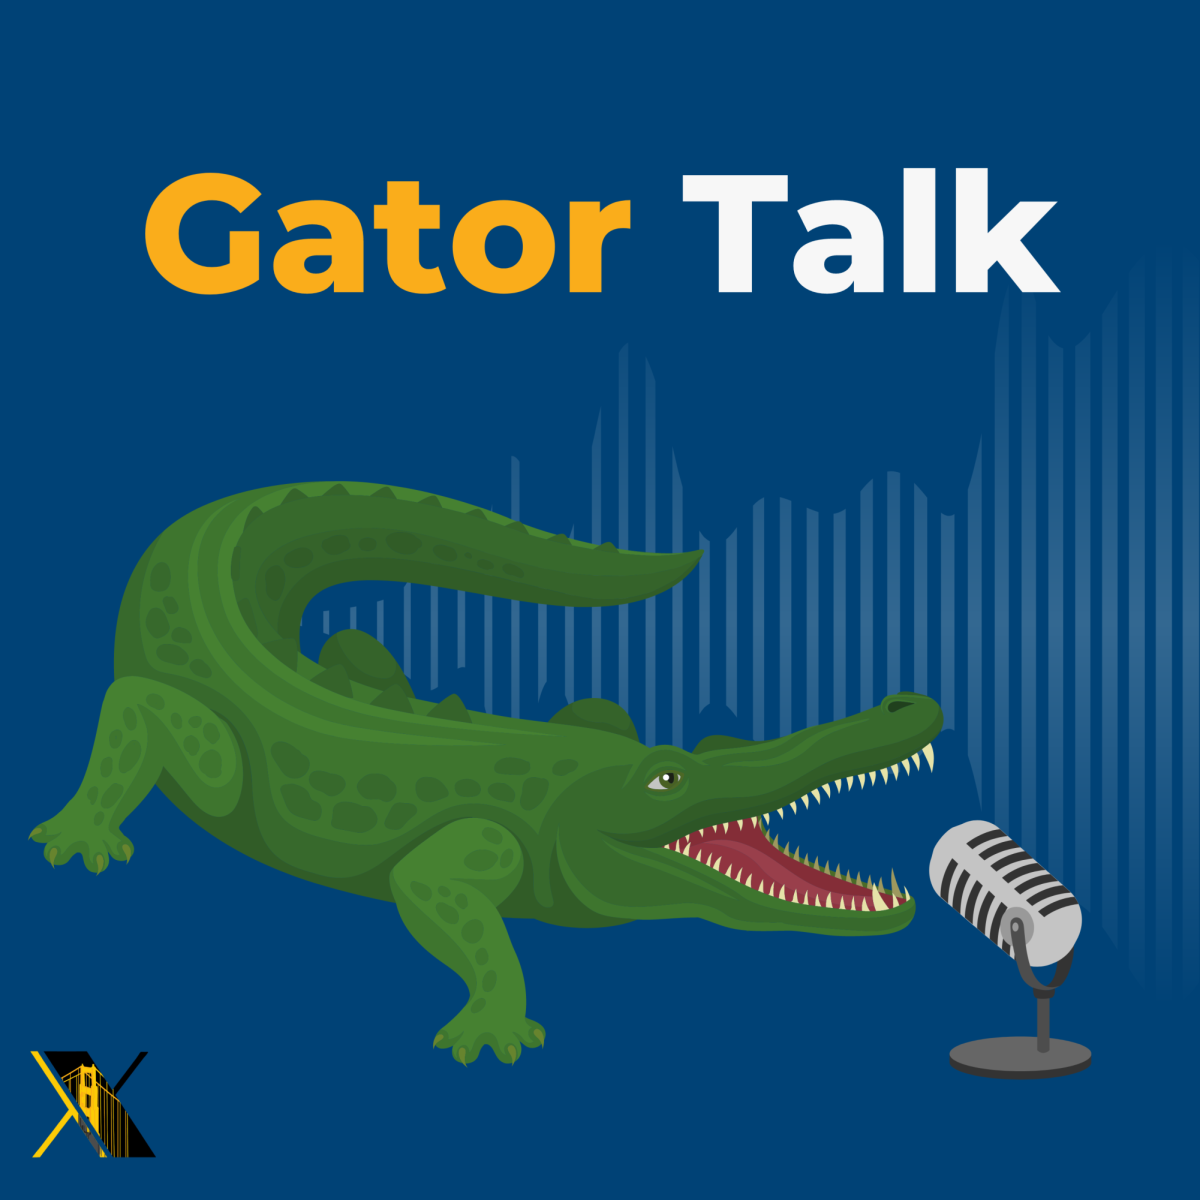 Gator Talk: A comic industry hero started at SFSU